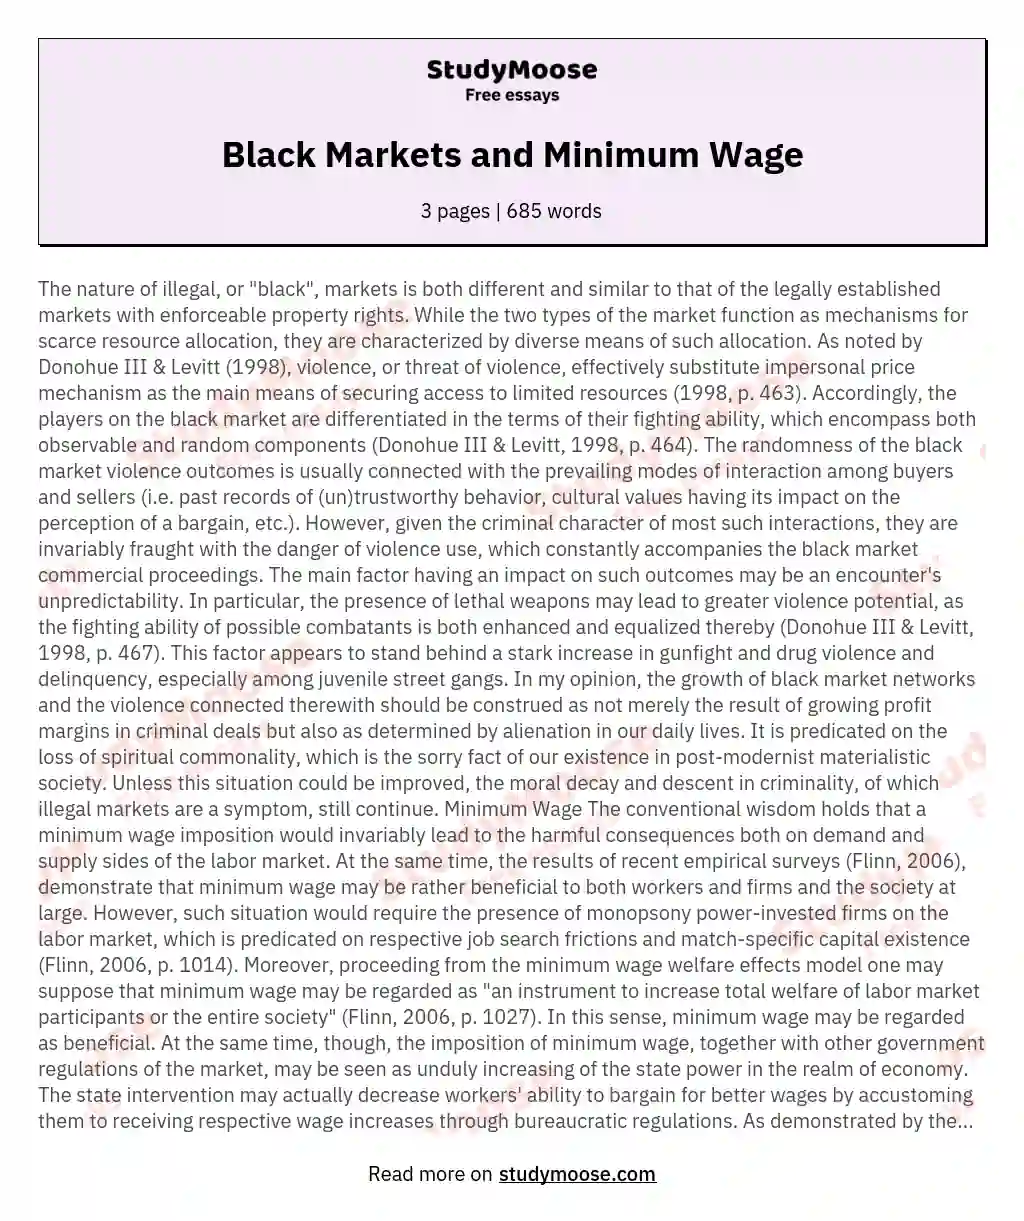 Black Markets and Minimum Wage essay